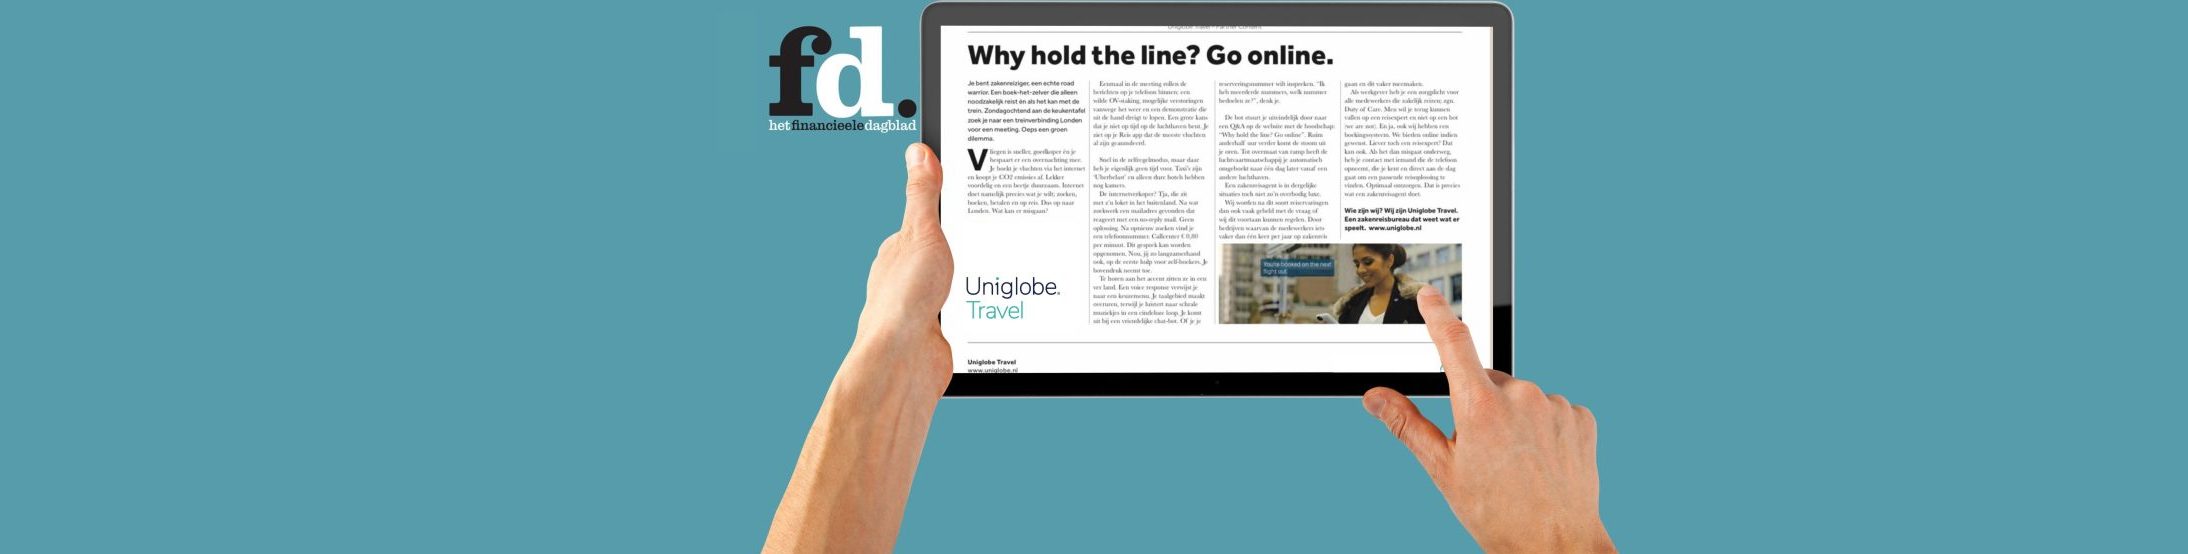 Artikel Financieel Dagblad: Why hold the line? Go online – Uniglobe Travel